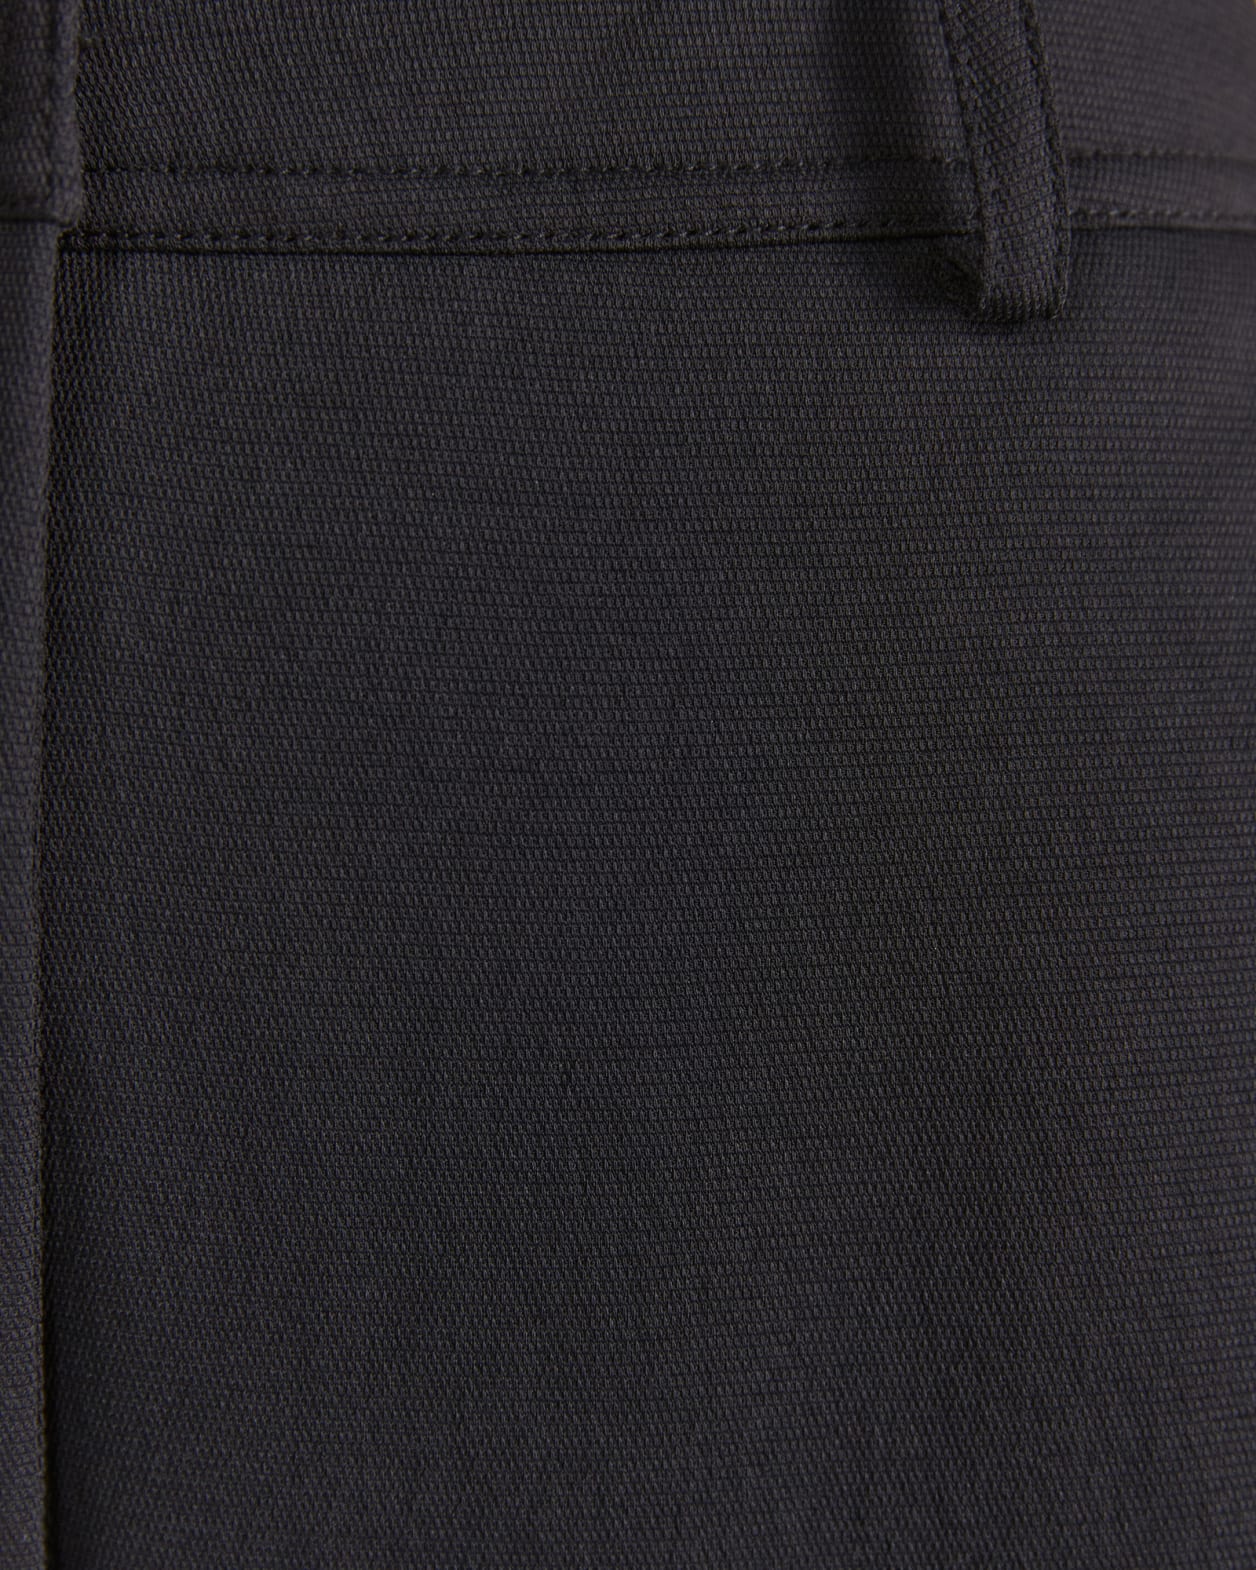 Dharma Midi Skirt in BLACK